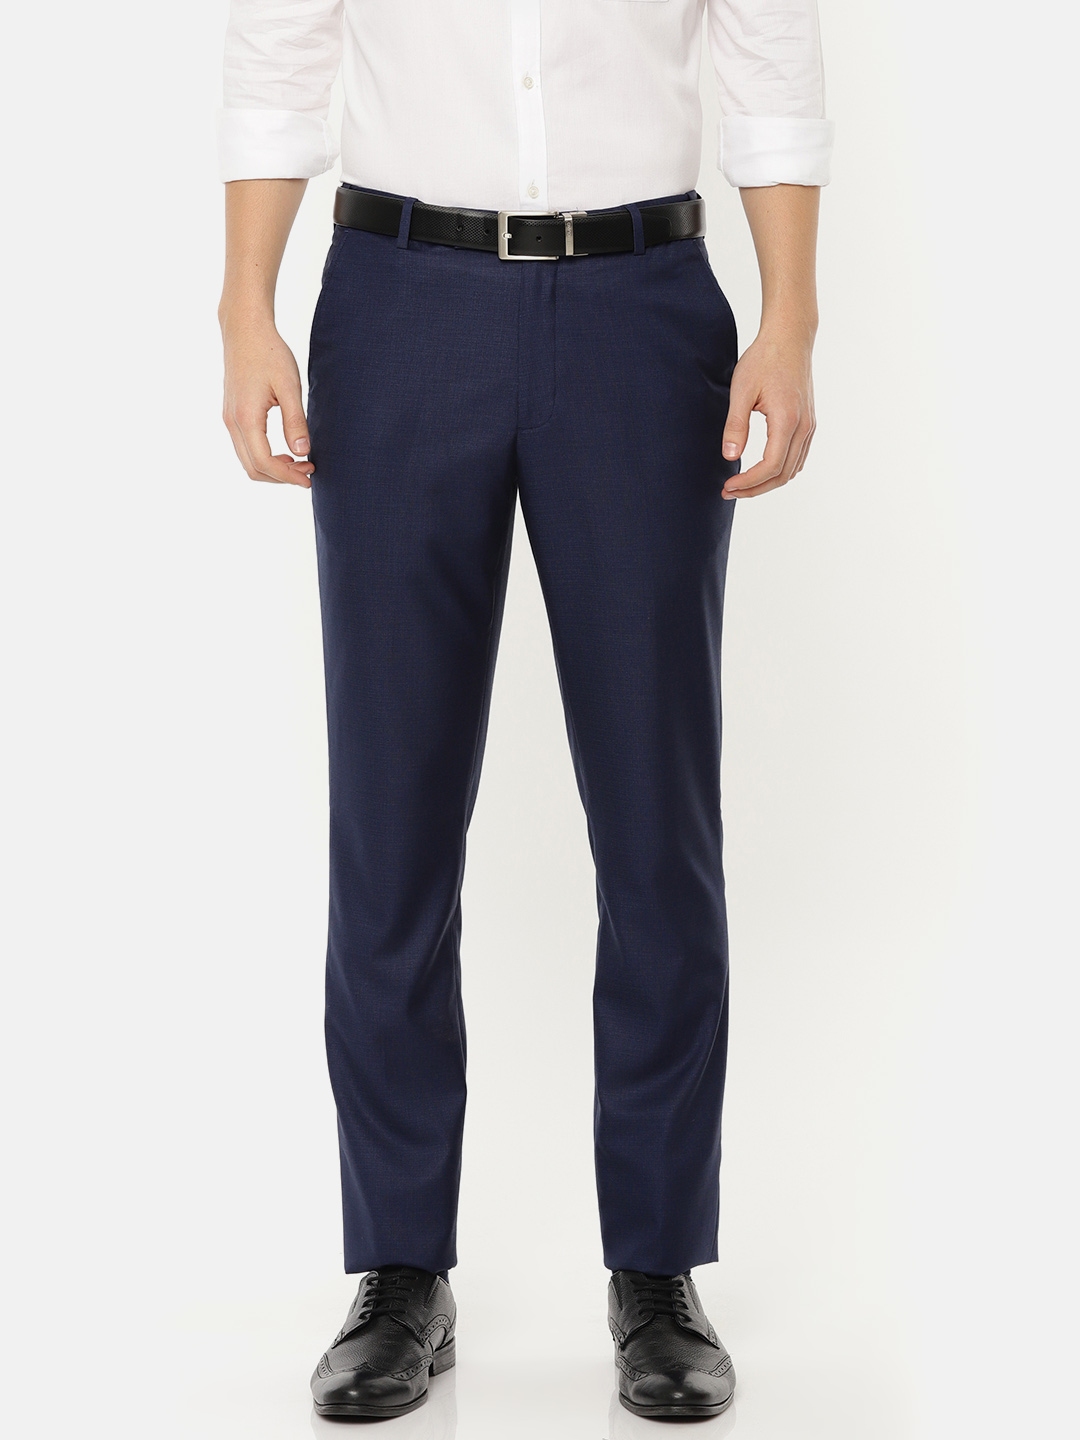 Buy Indigo Nation Men Navy Blue Slim Fit Solid Formal Trousers ...